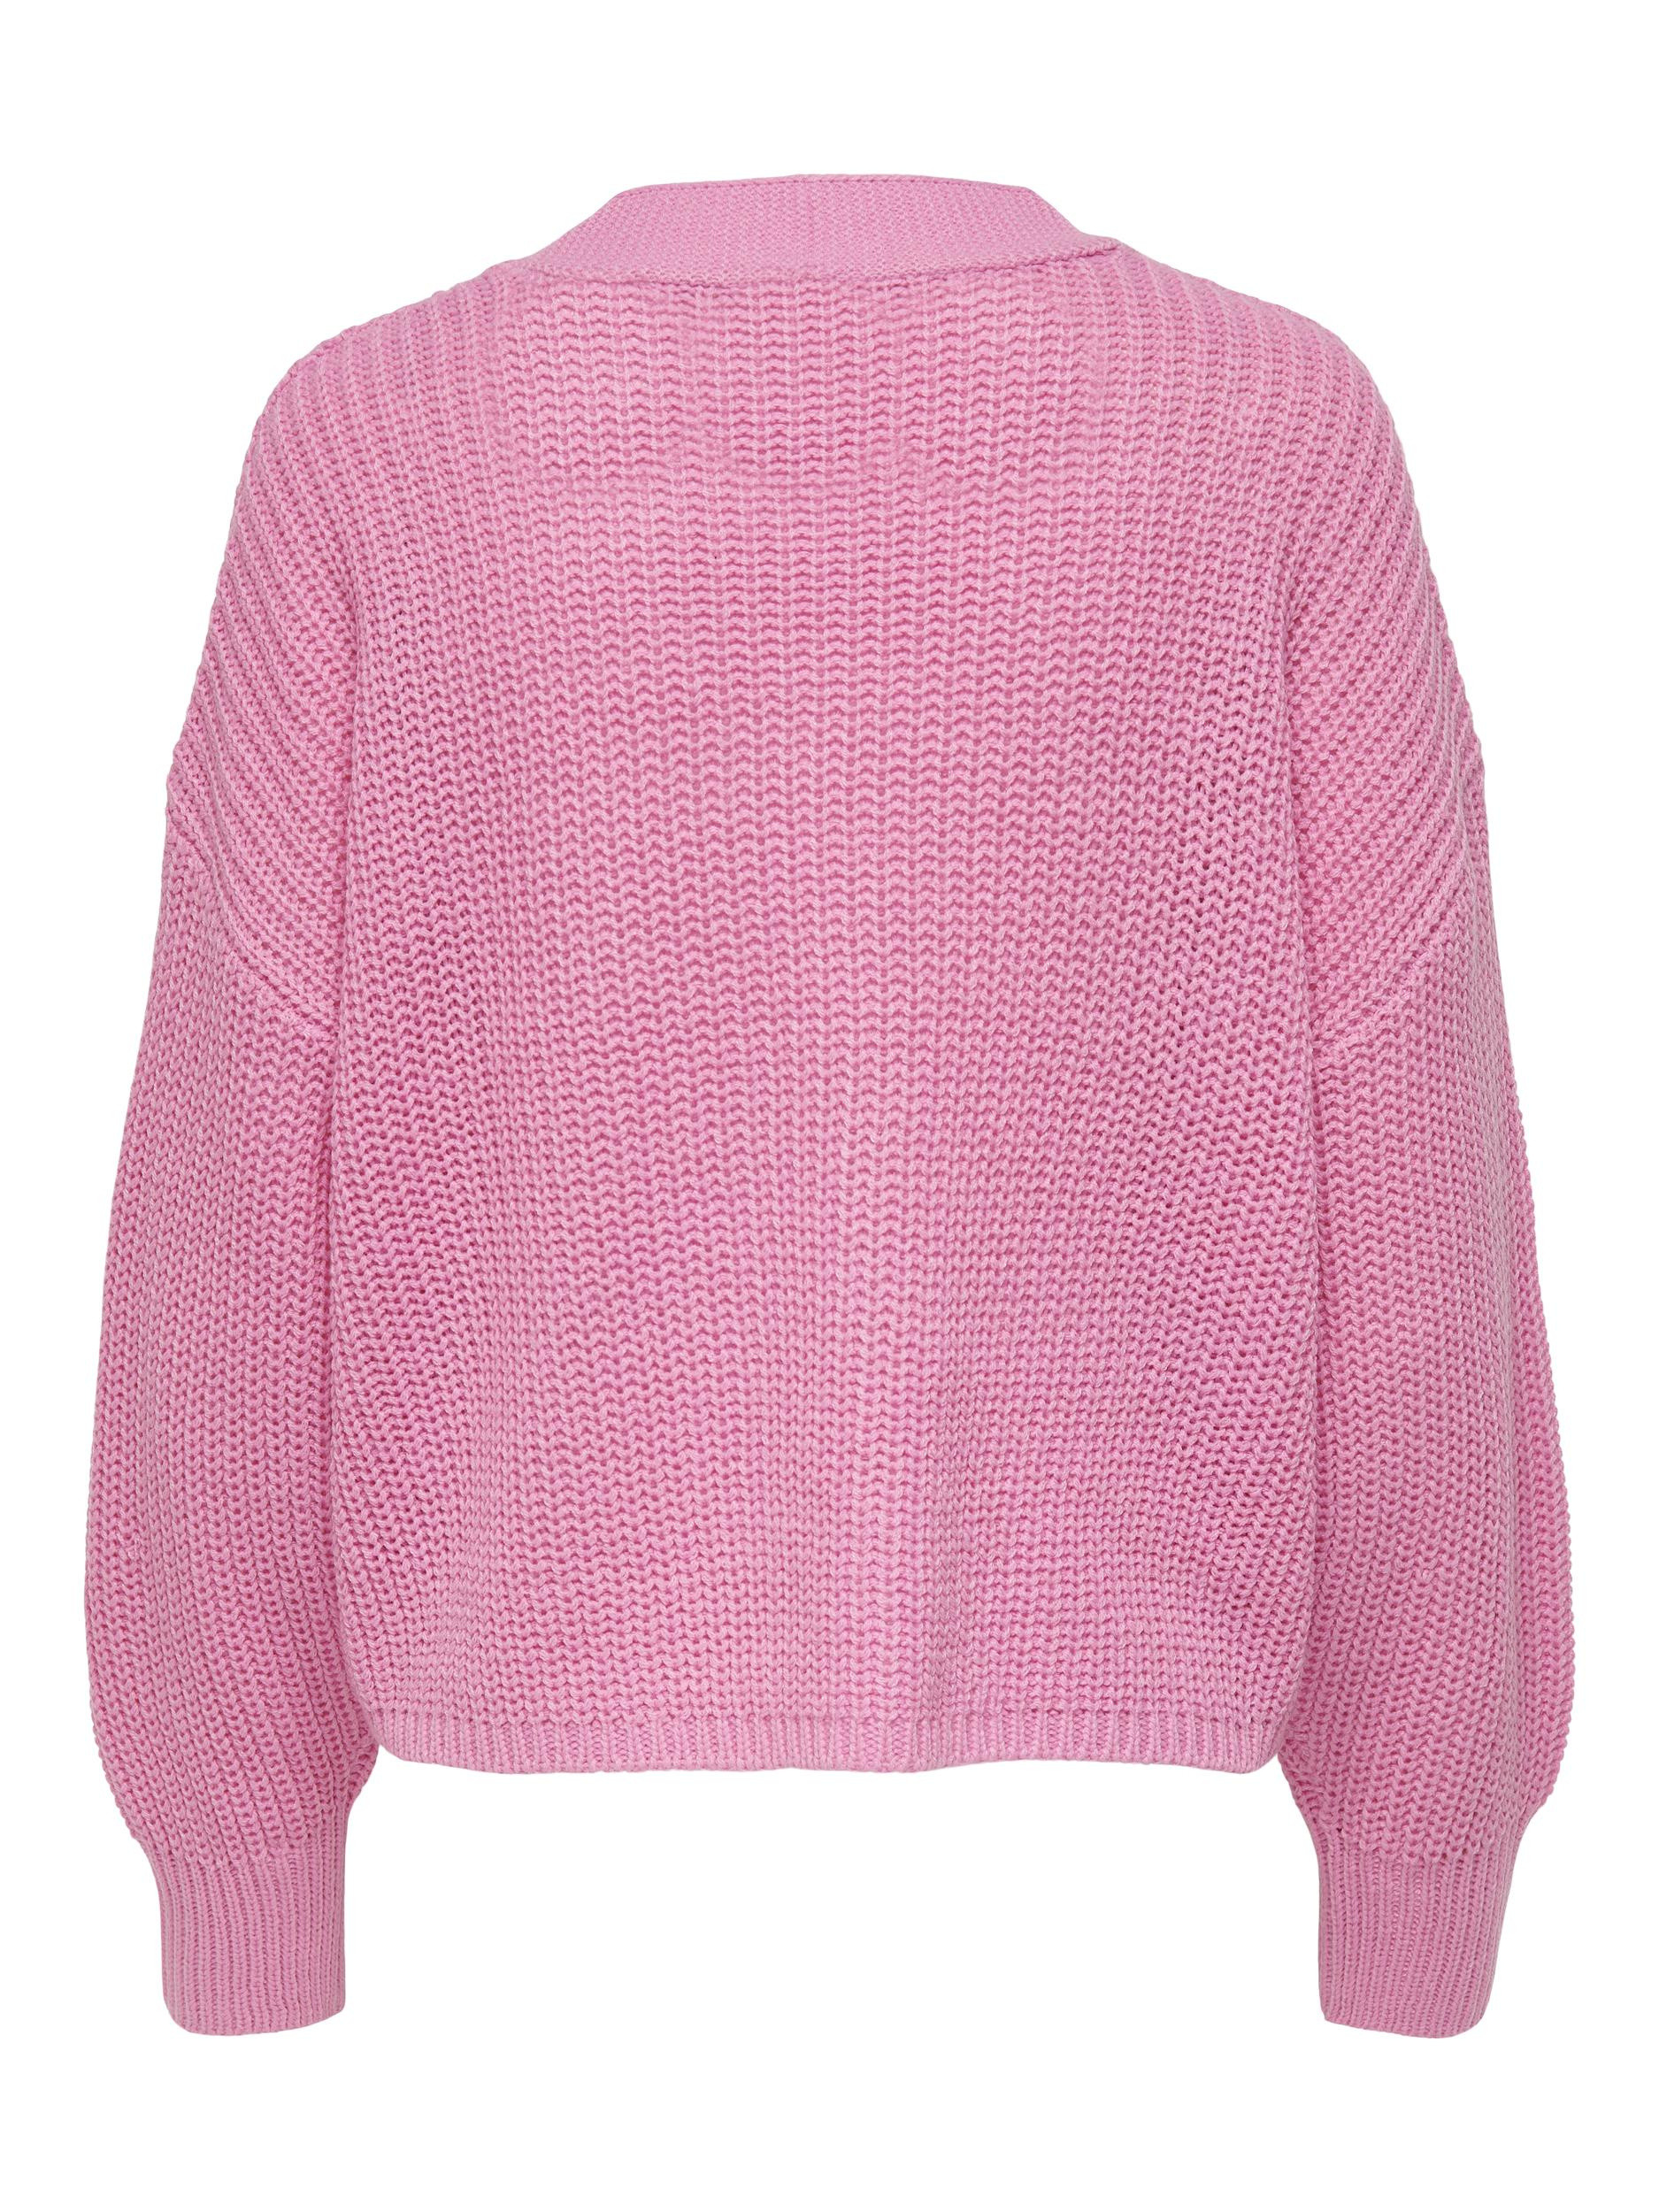 Only - Knit cardigan, Pink Flamingo, large image number 1